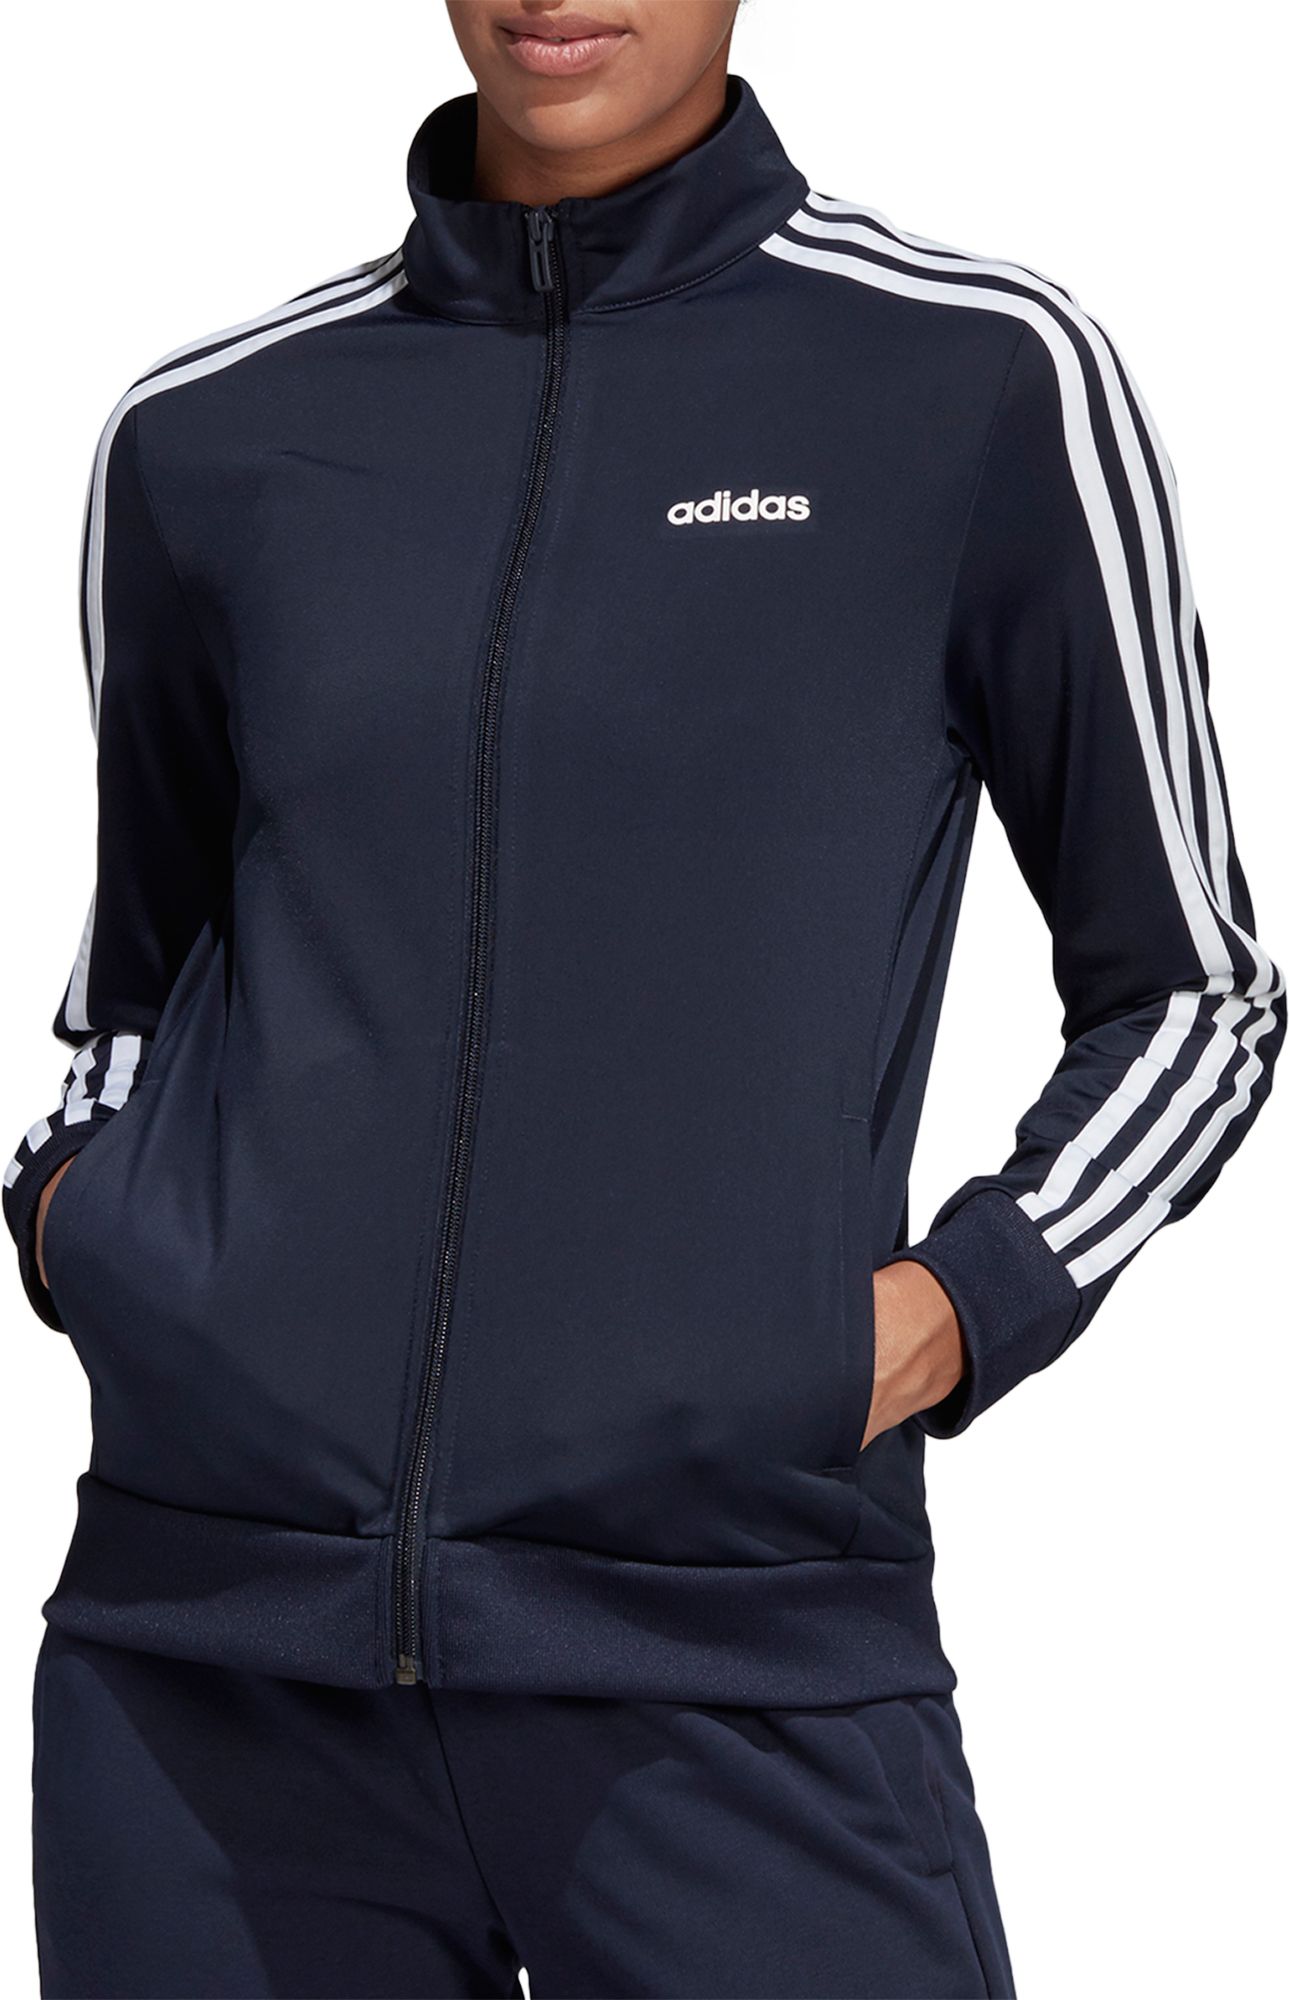 women's adidas tricot jacket